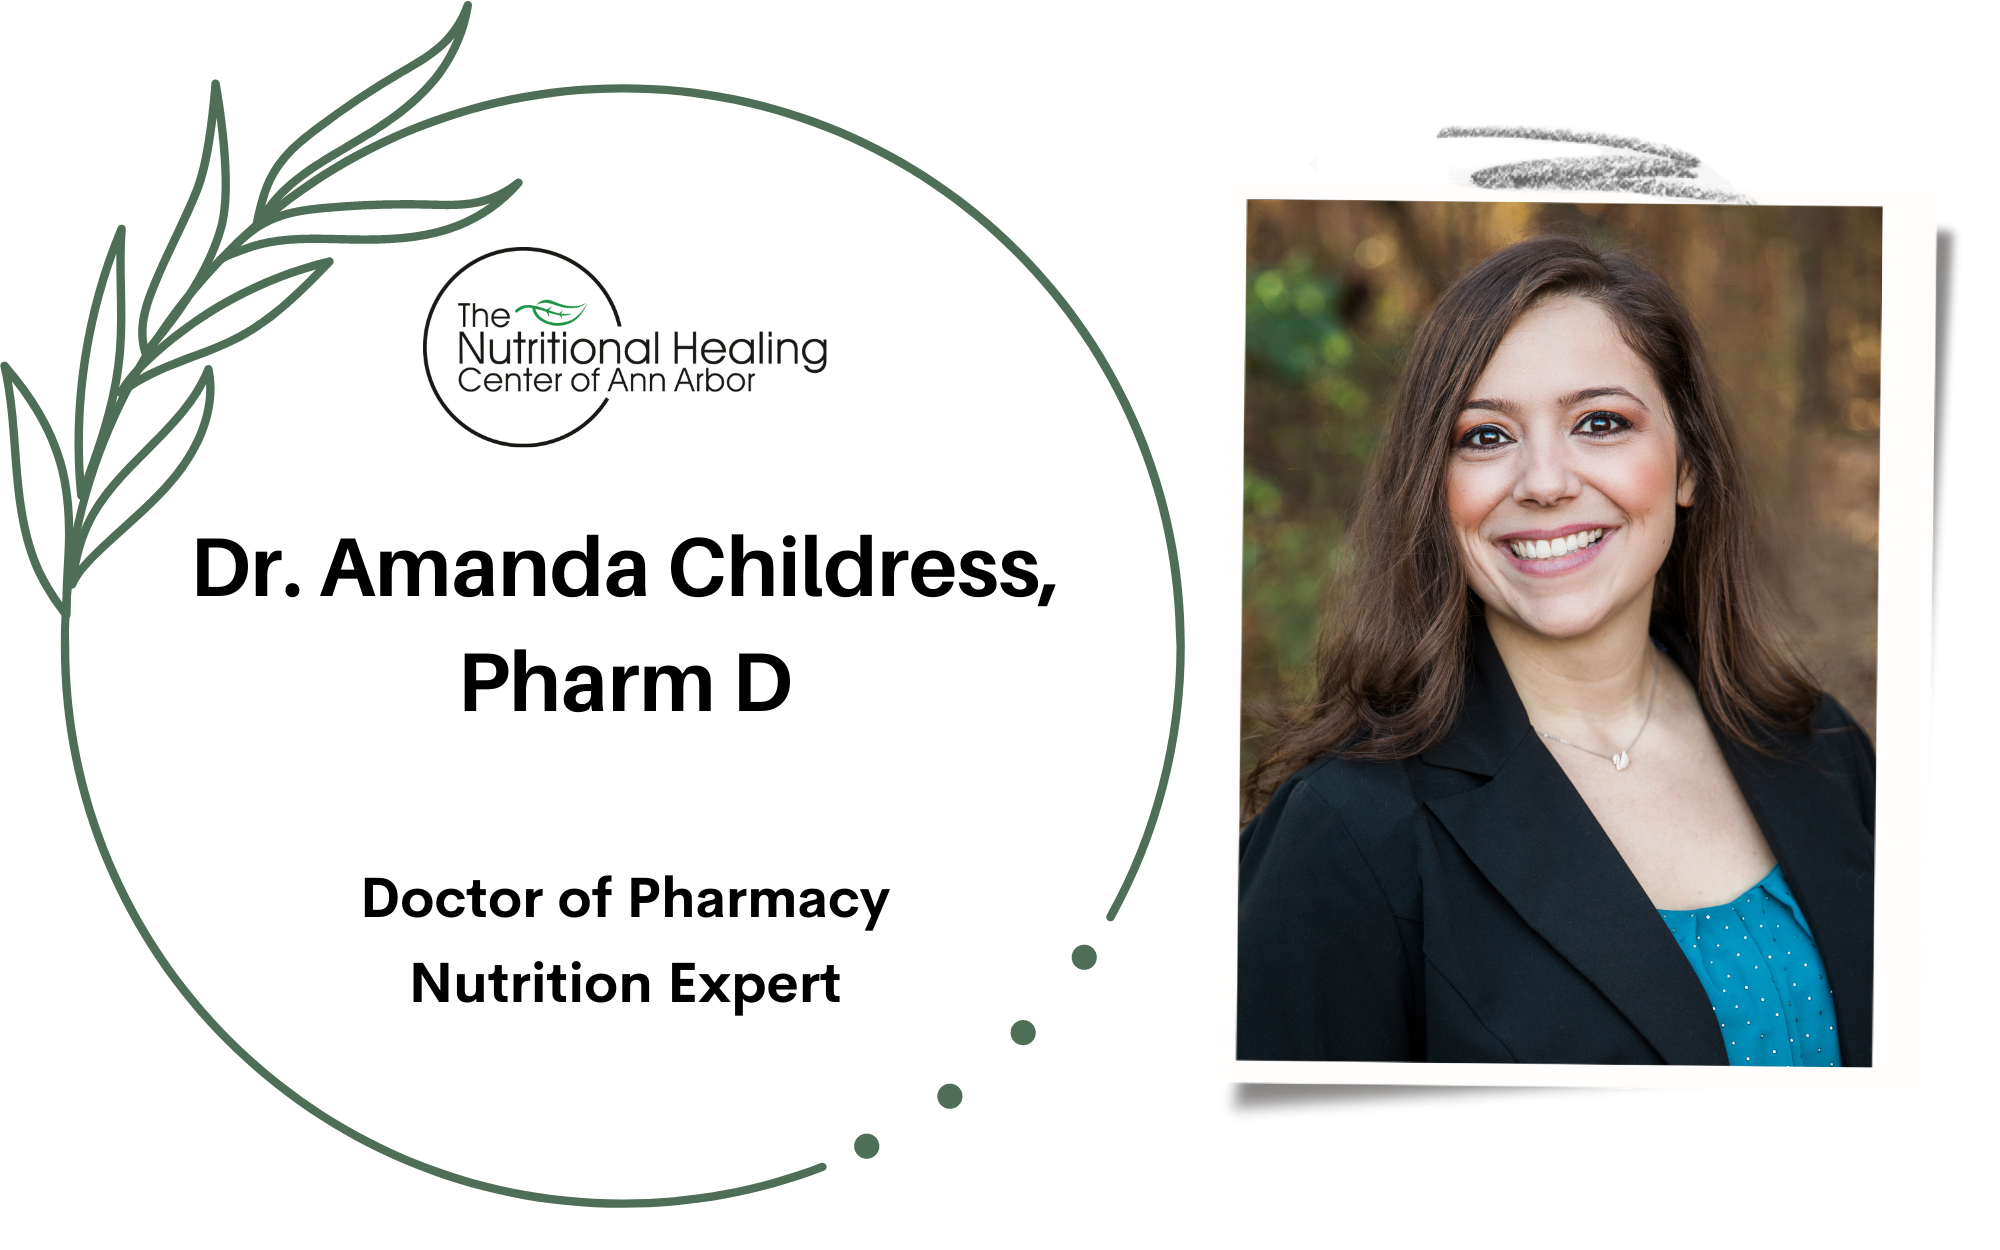 Dr. Amanda Childress